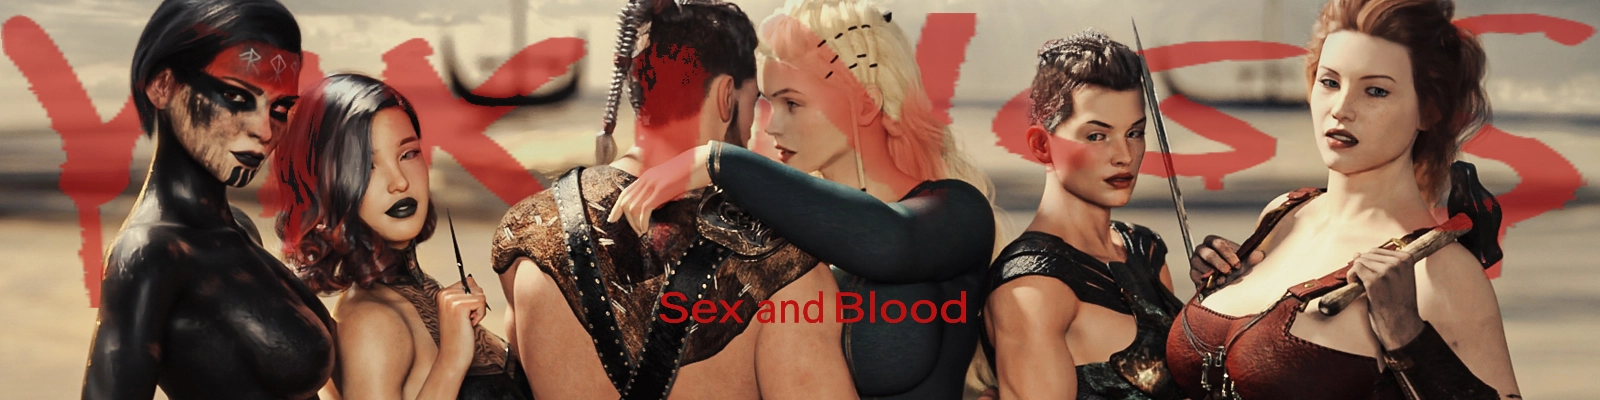 Vikings: Sex and Blood main image